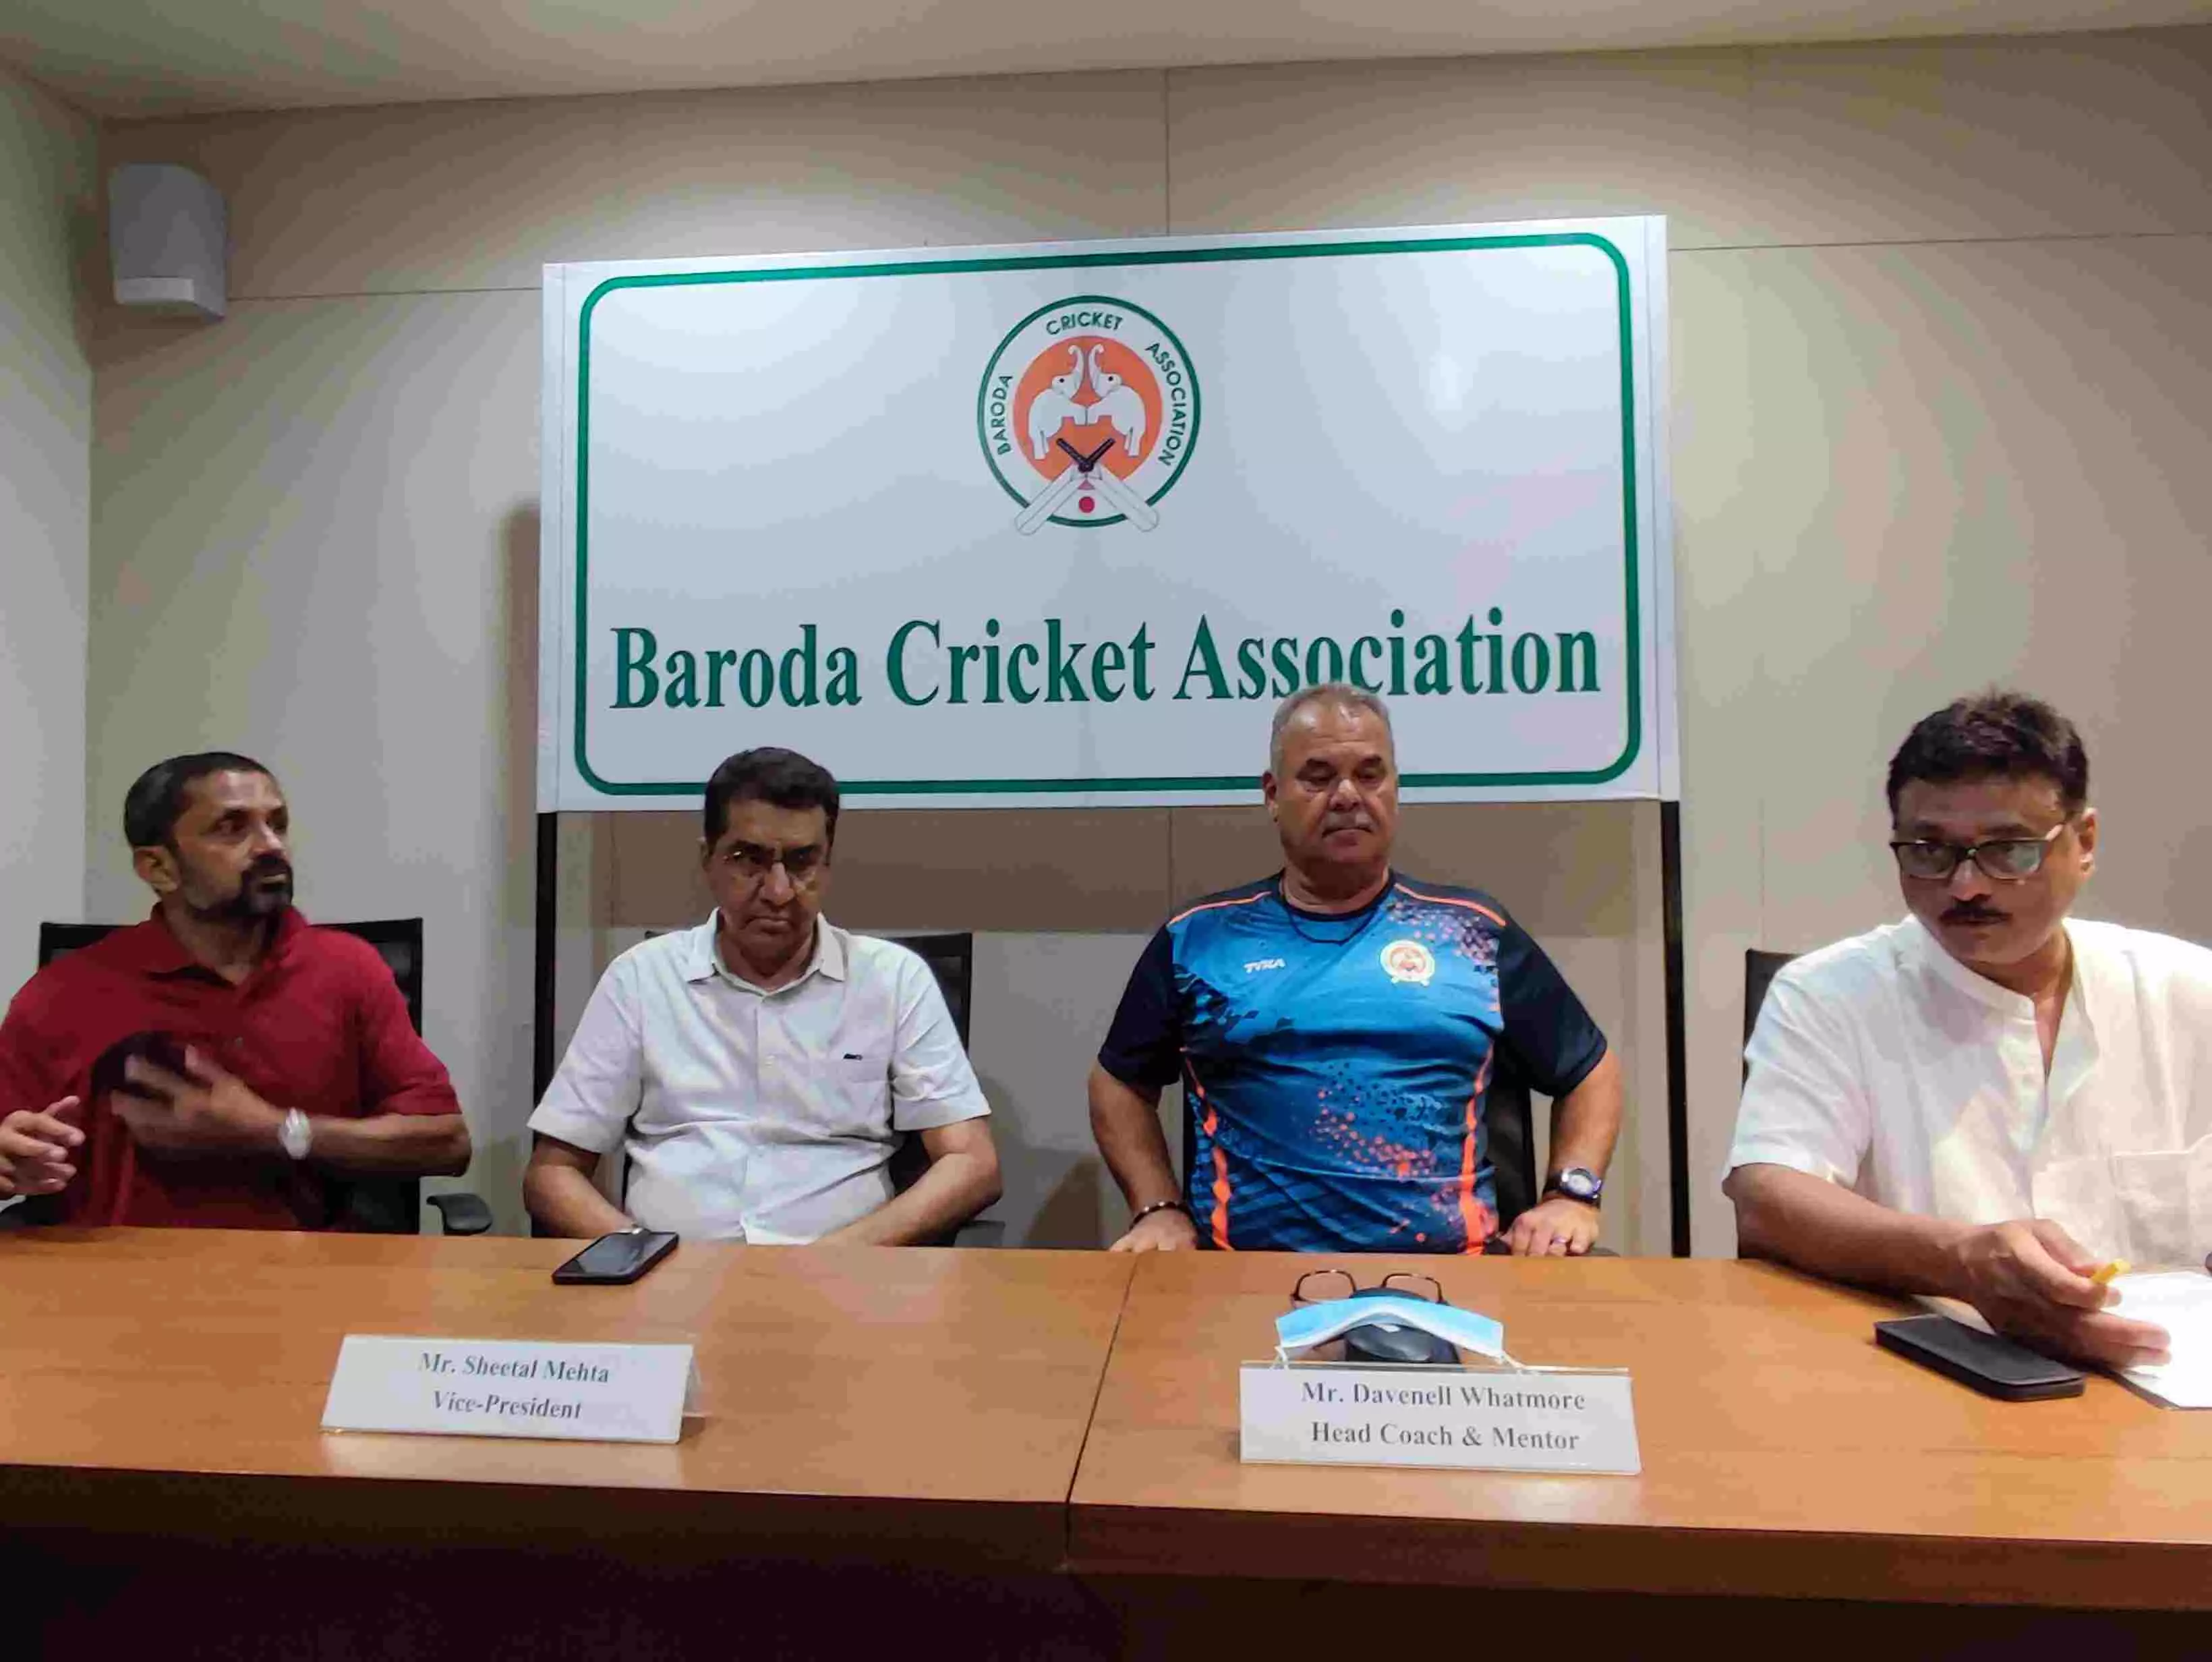 Davenell Whatmore joined Baroda Cricket Association as the head coach of senior team